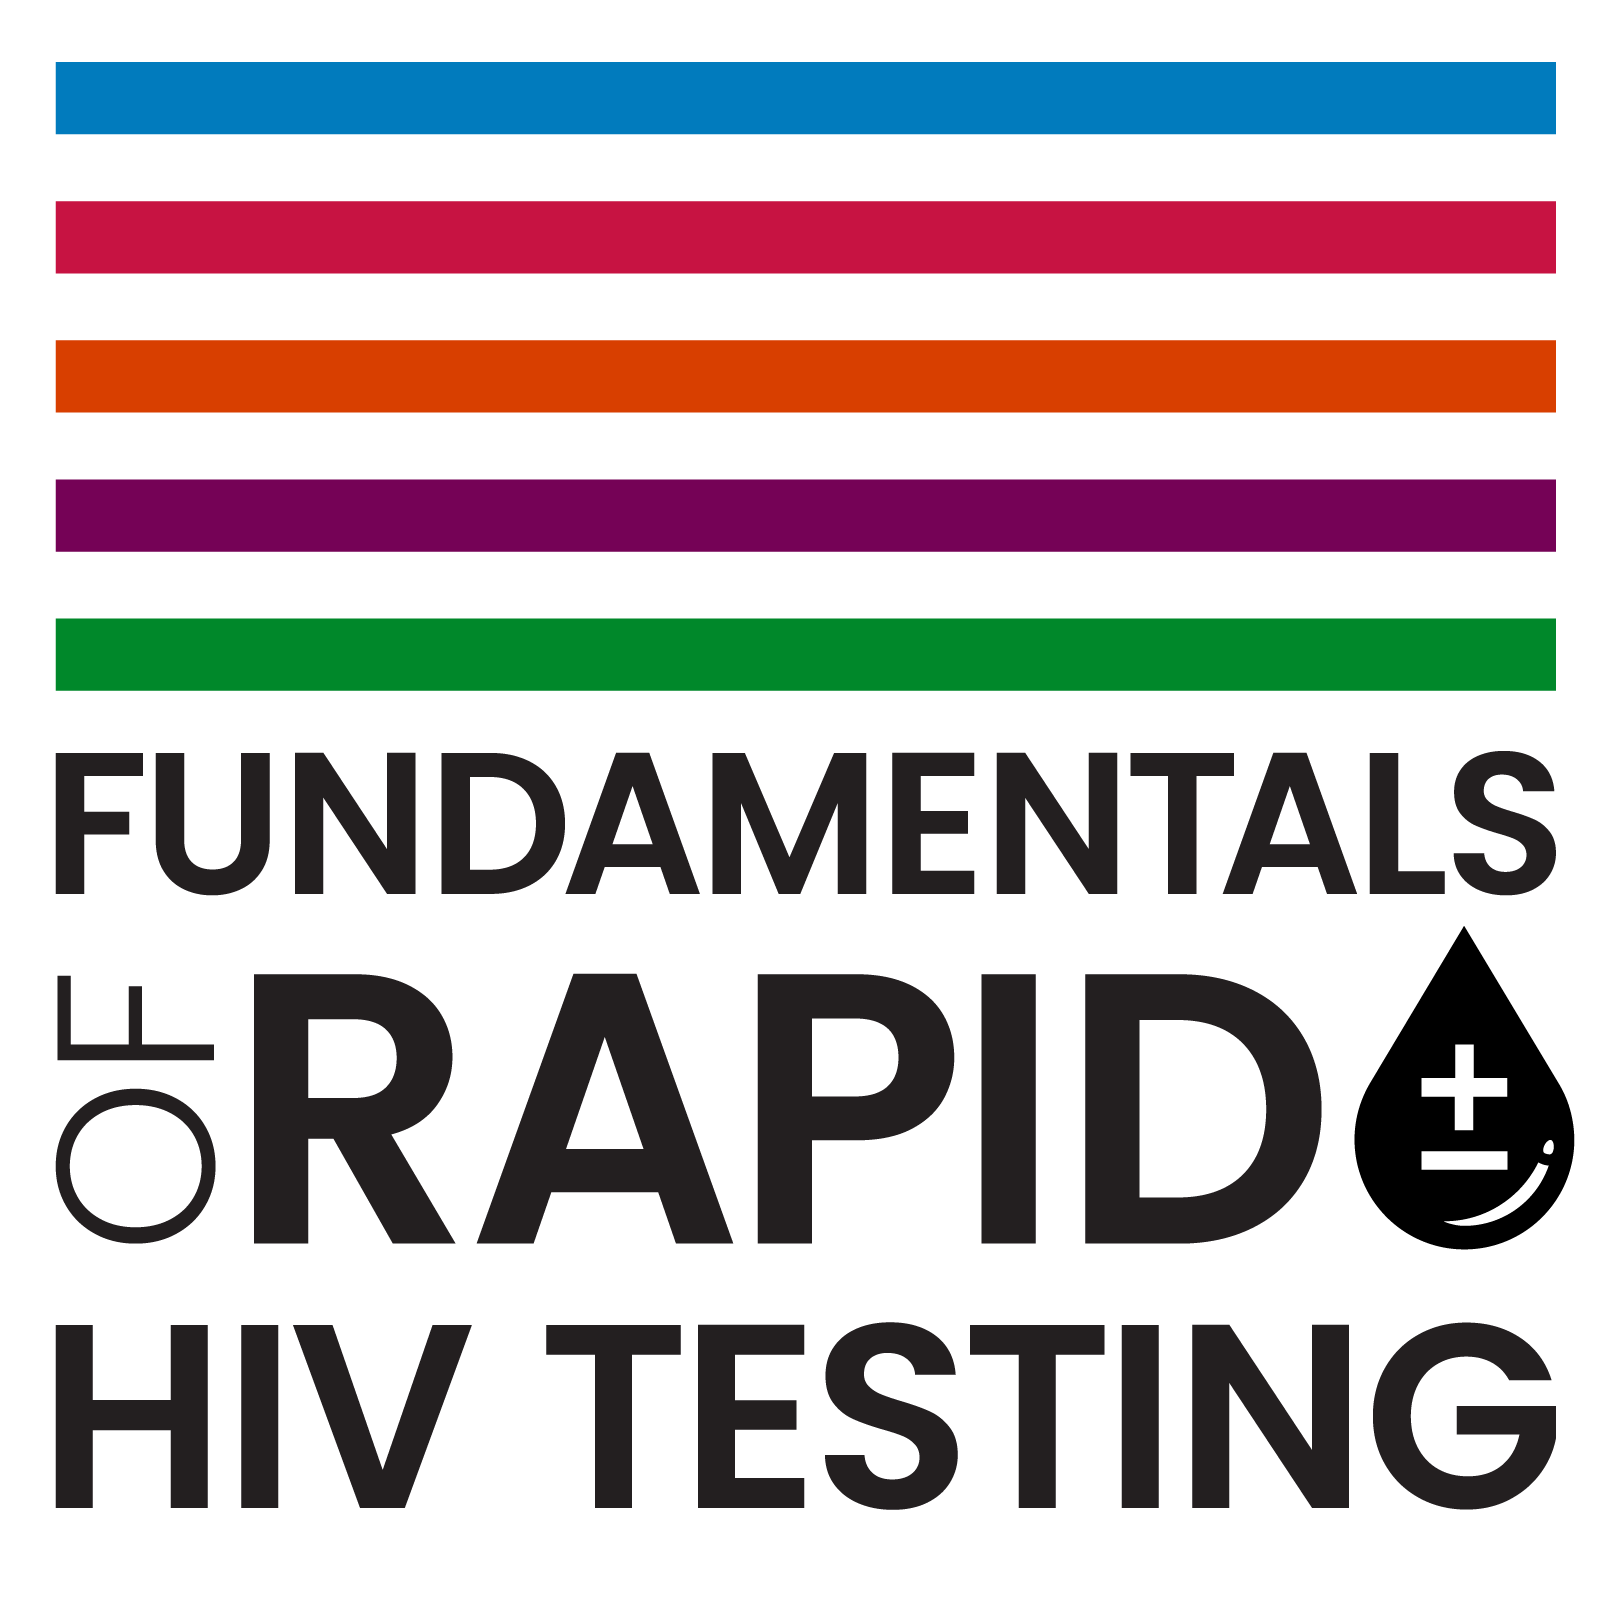 Rapid HIV Testing Training logo